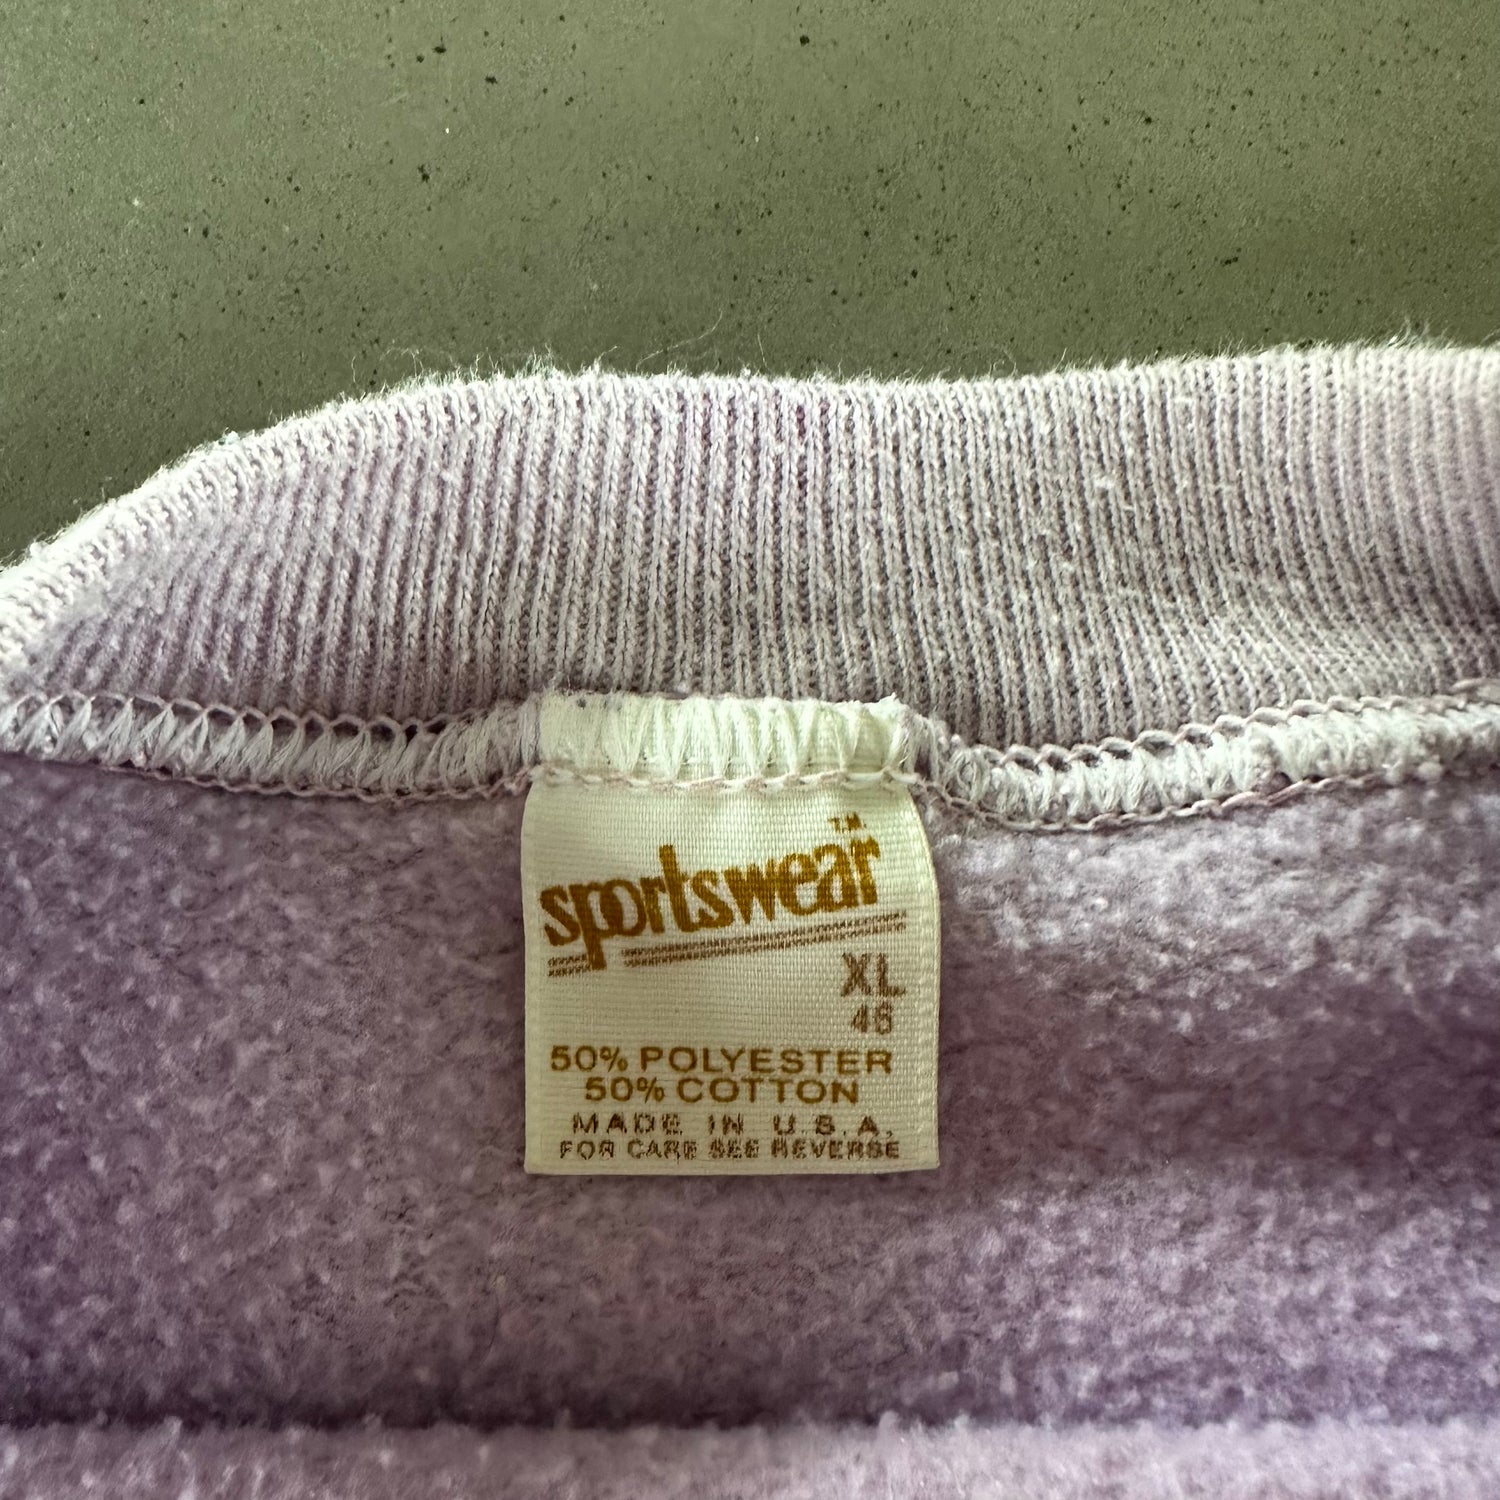 Vintage 1980s Ocean City Sweatshirt size XL